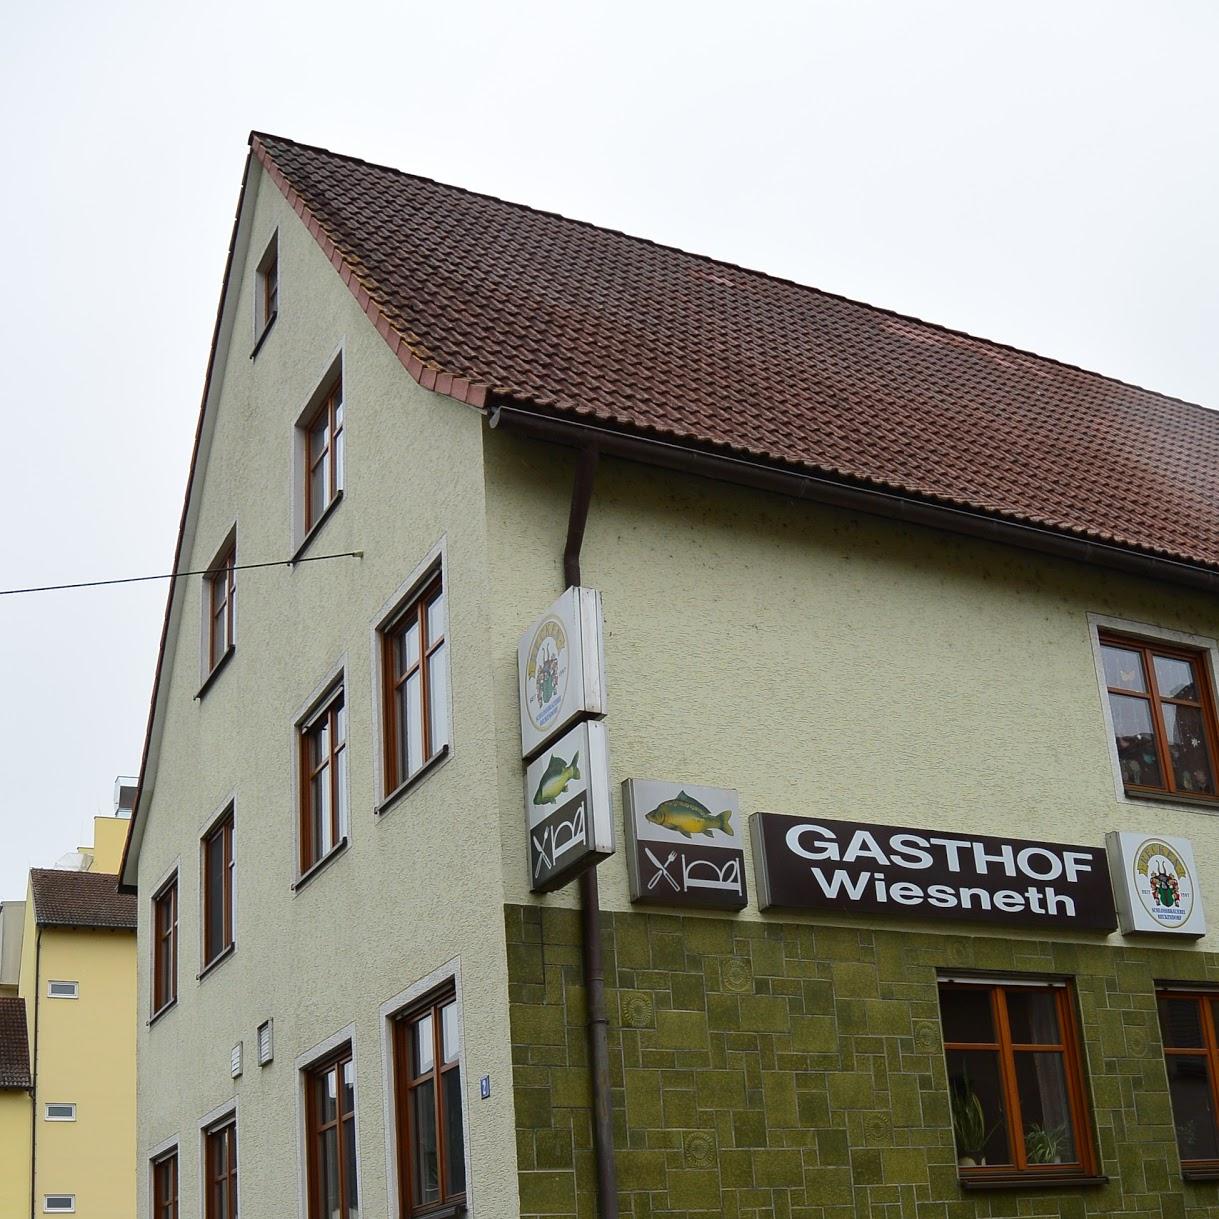 Restaurant "Gasthof Wiesneth" in  Pommersfelden